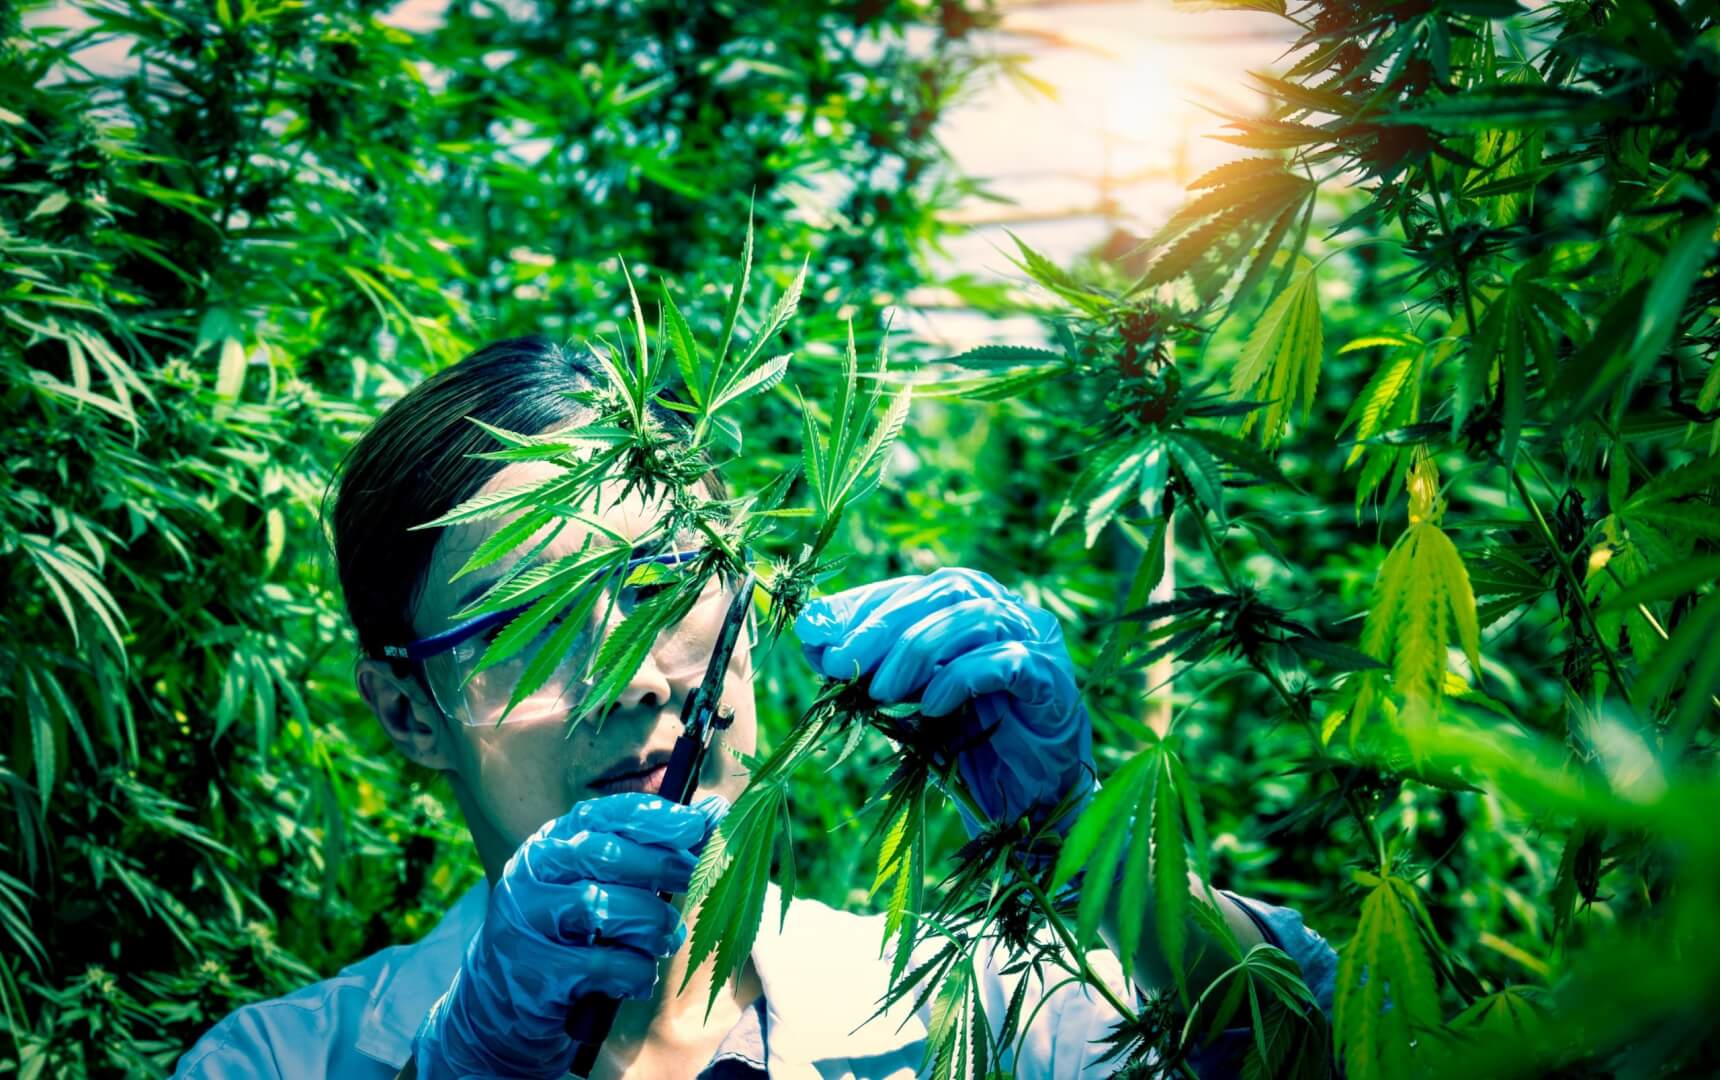 re-vegging cannabis